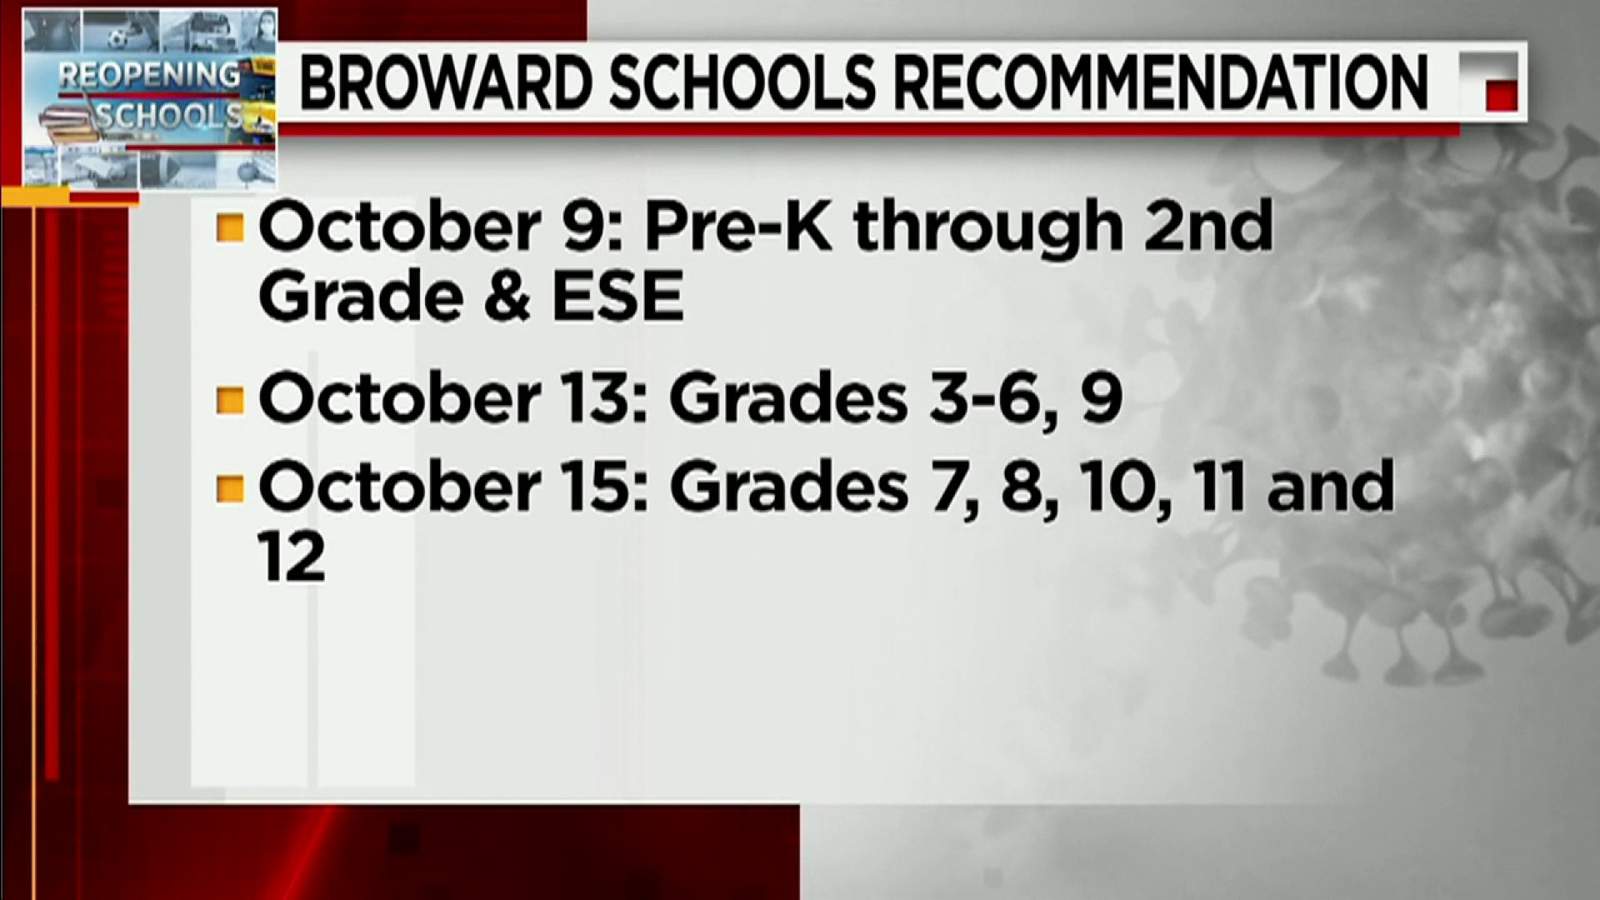 Broward County School Board decides to start gradual reopening on Oct. 9